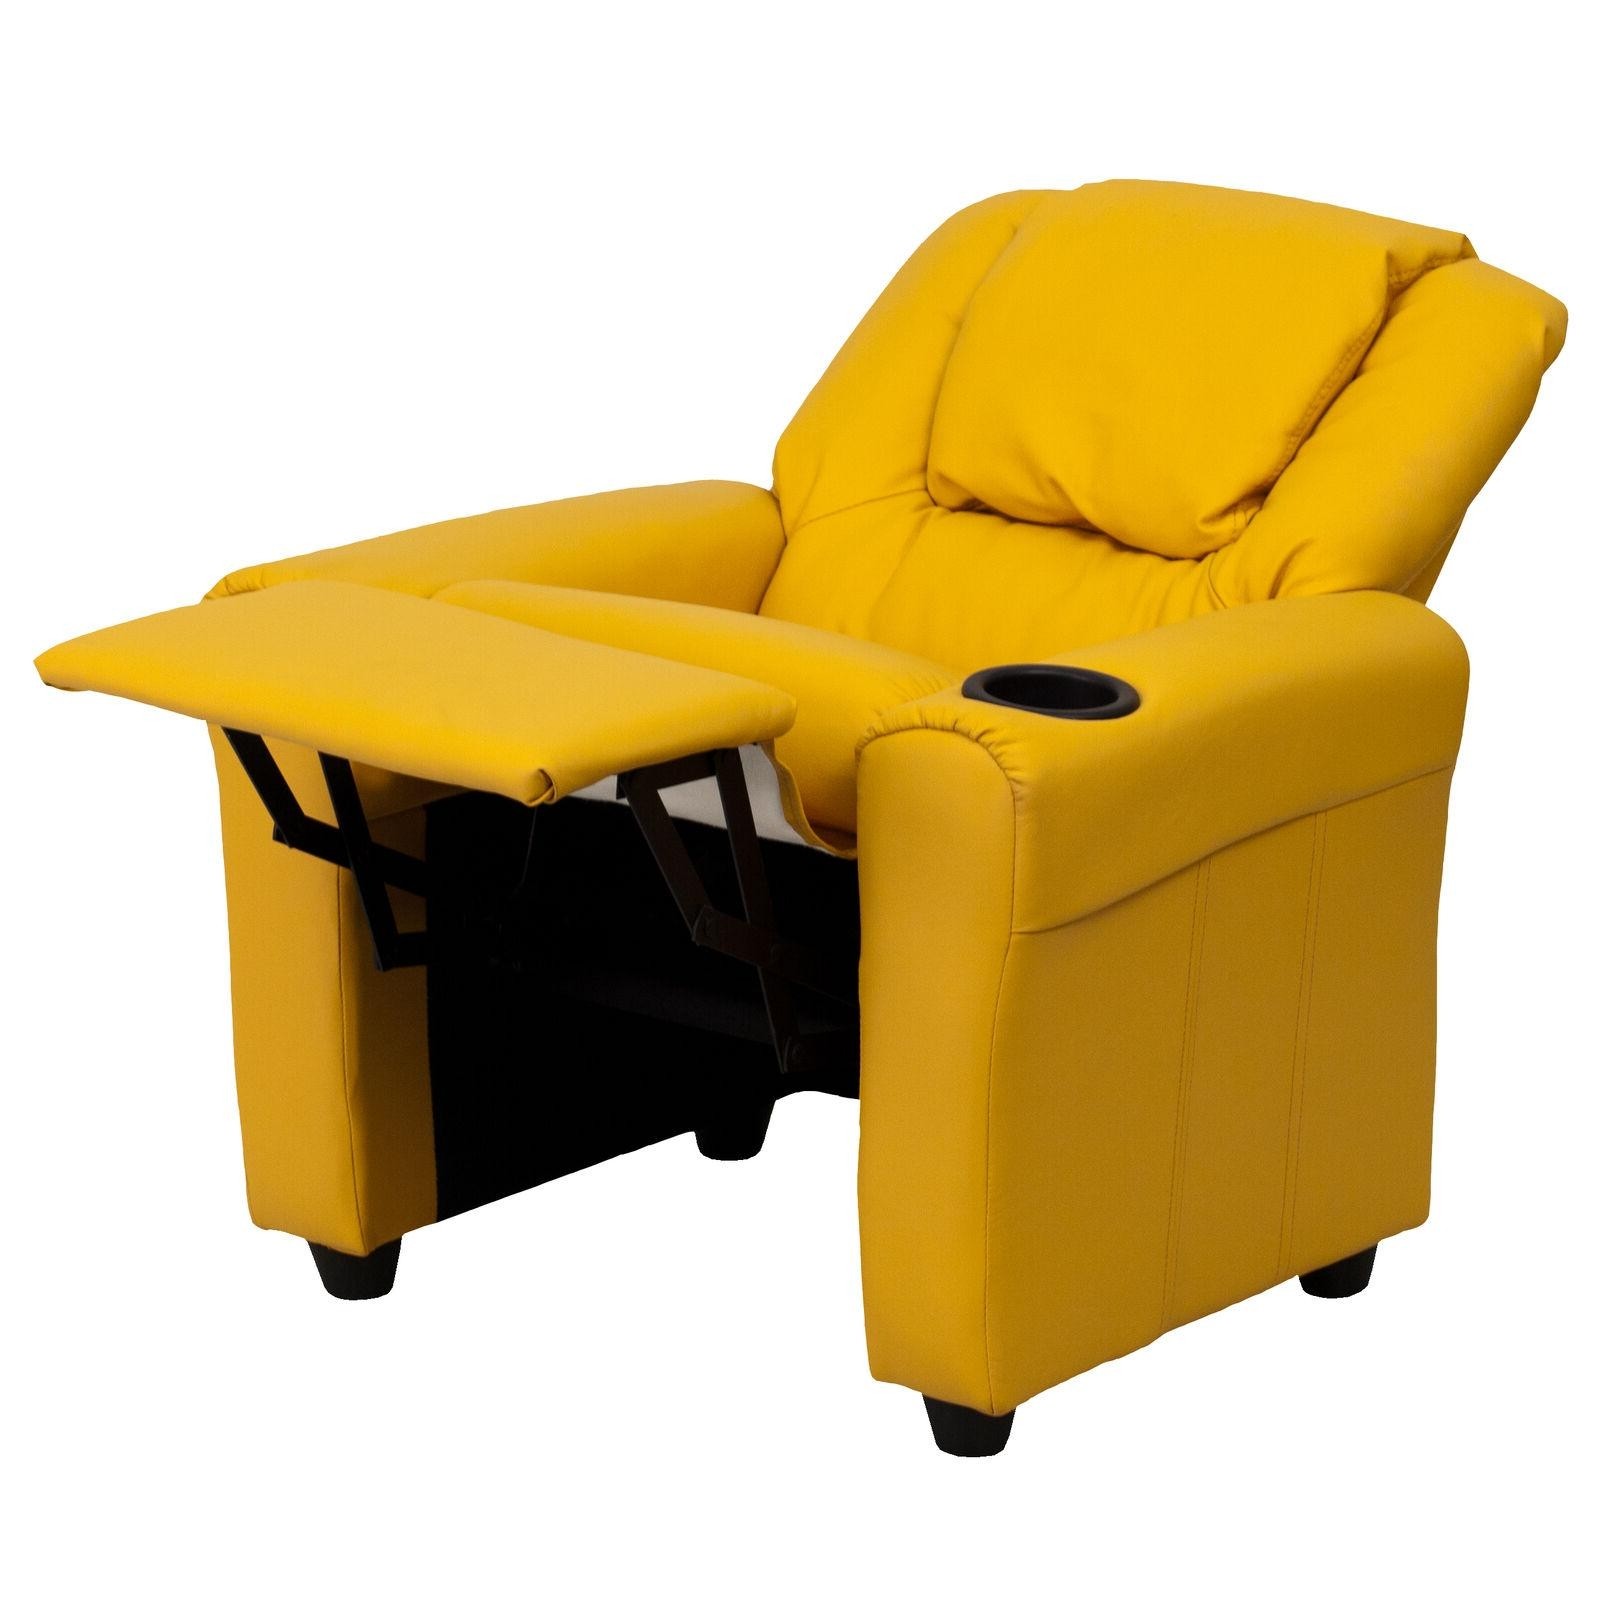 Yellow kids recliner chair vinyl w cup holder 1